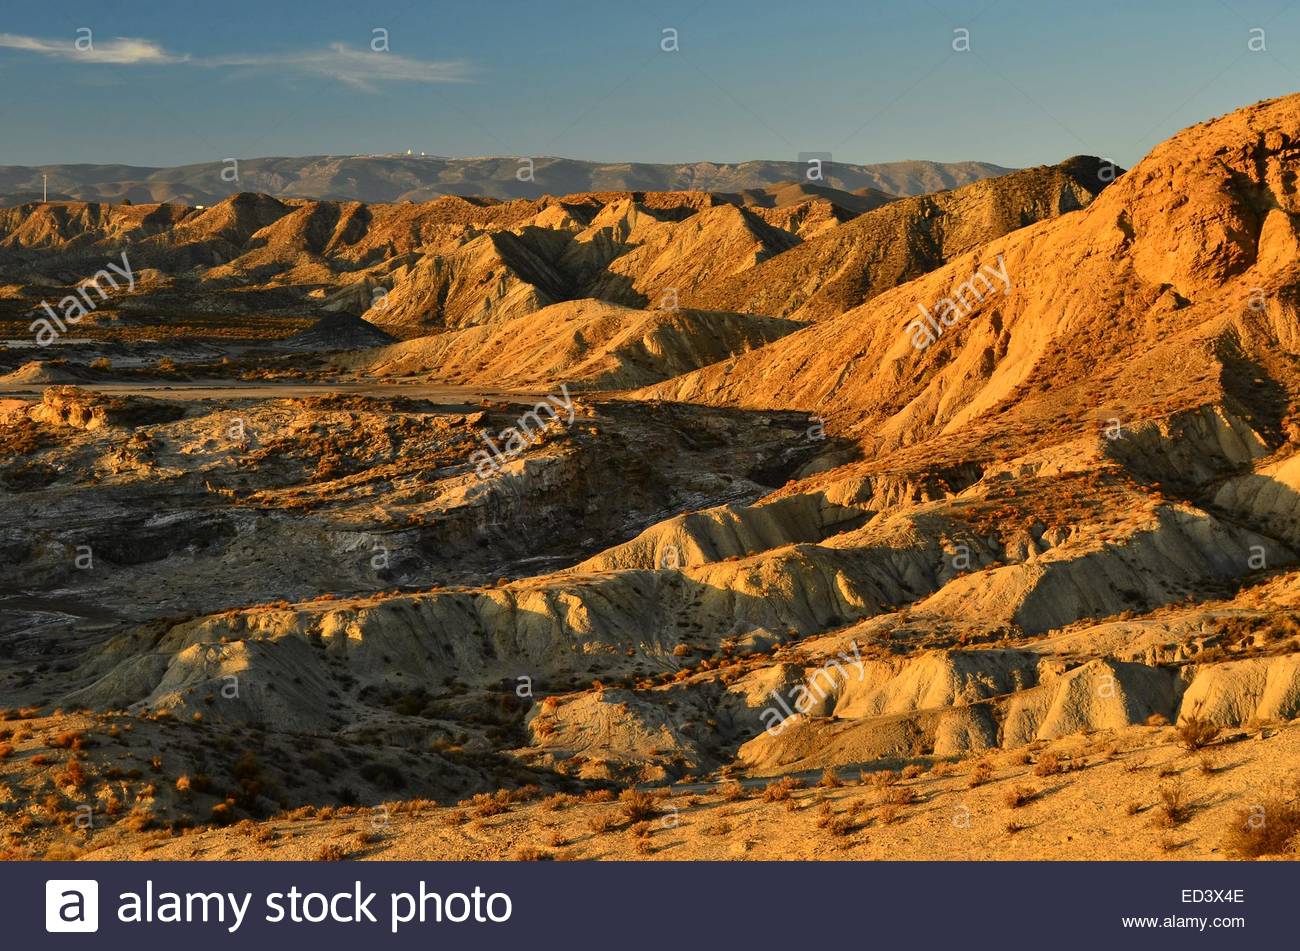 almeria desert